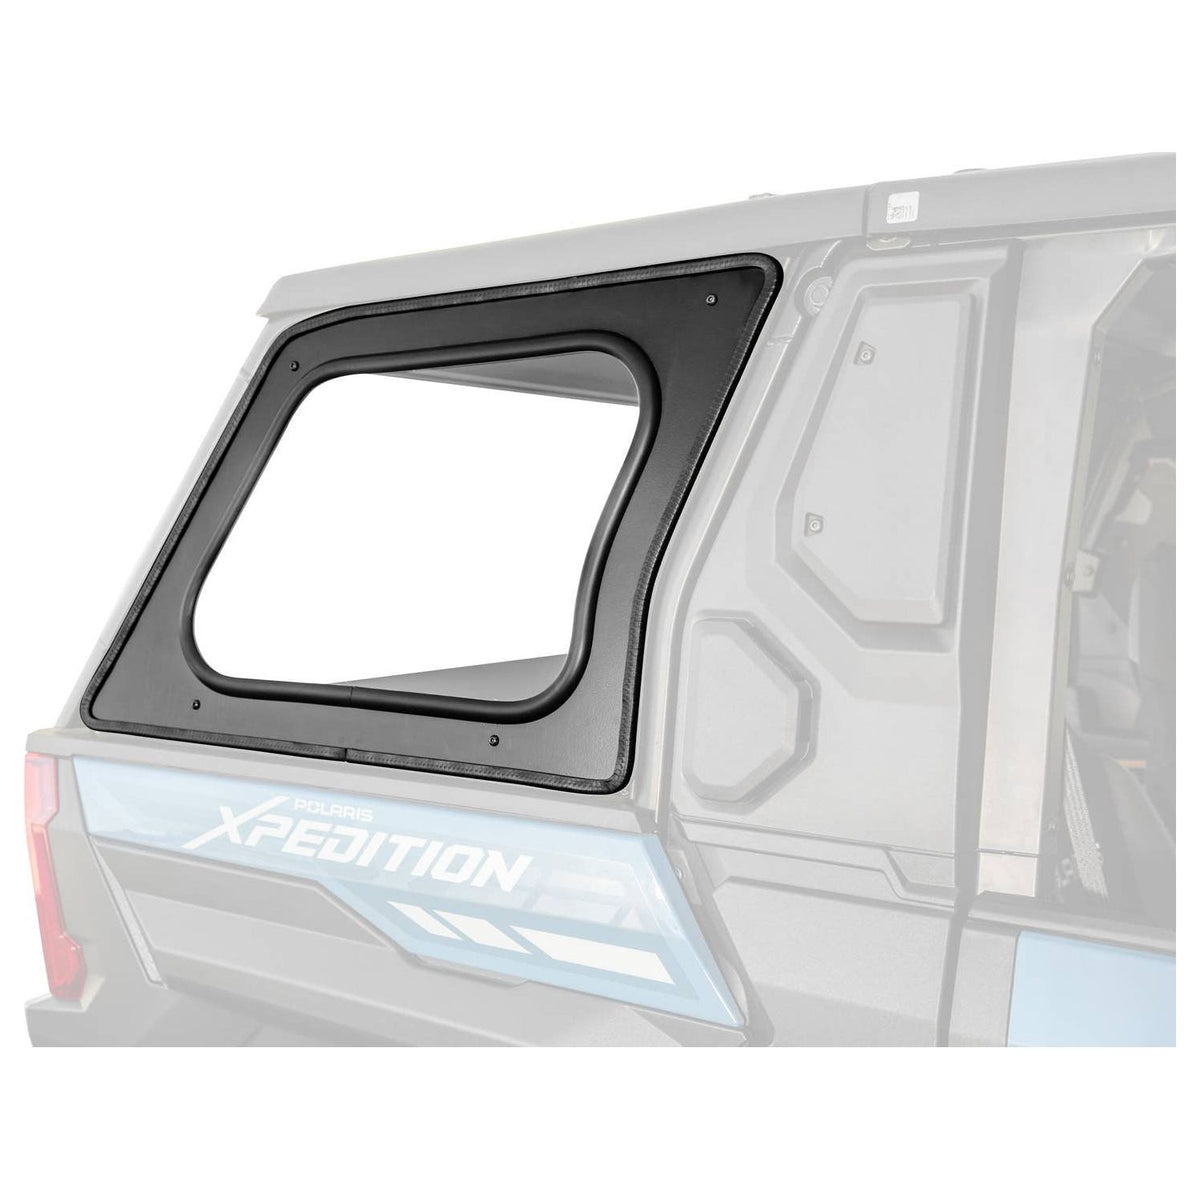 Polaris Xpedition ADV Rear Side Windows | SuperATV